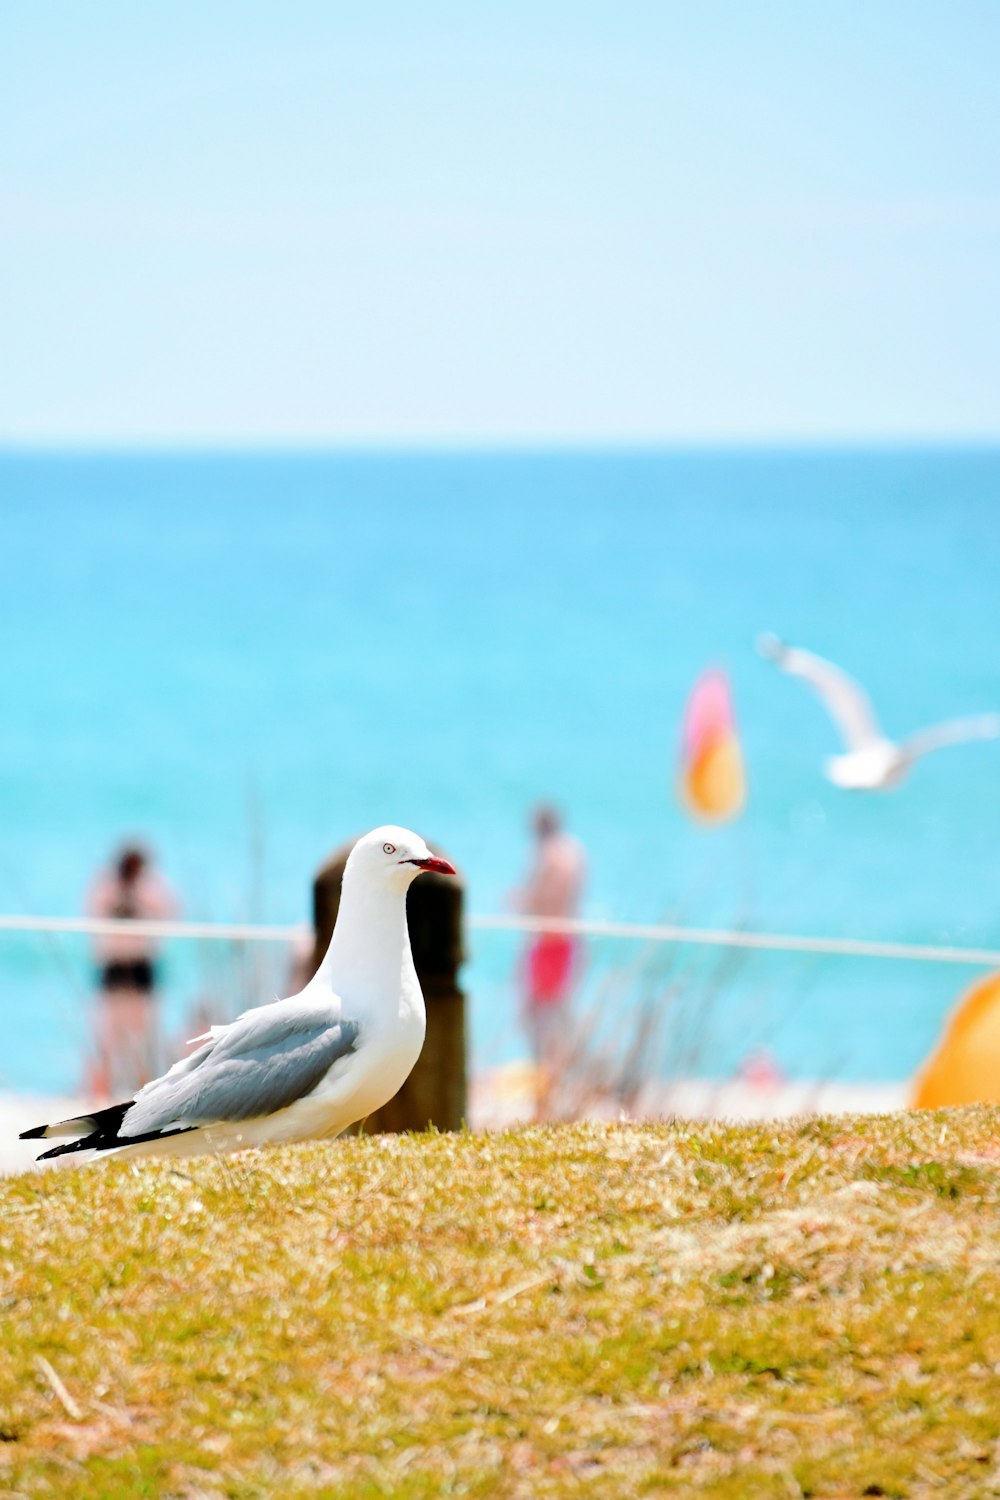 pássaro branco e cinza na grama marrom perto do corpo de água durante o dia